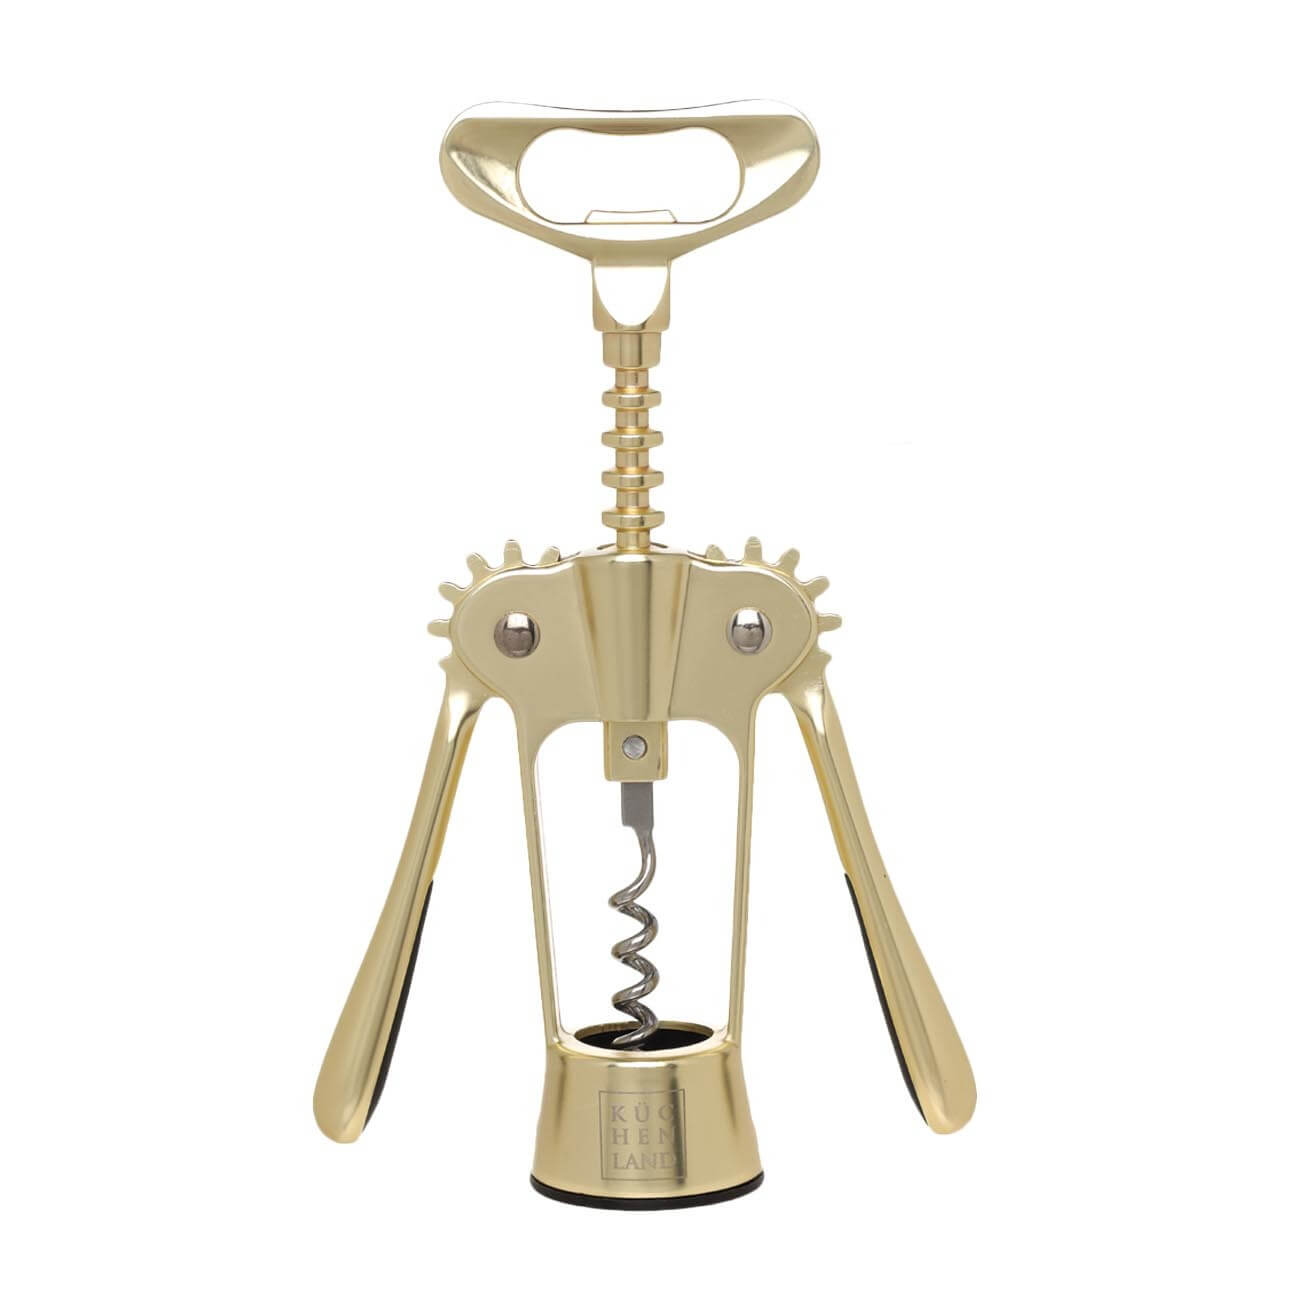 Штопор рычажный, 20 см, металл/пластик, золотистый, Start gold рычажный трубный ключ av steel